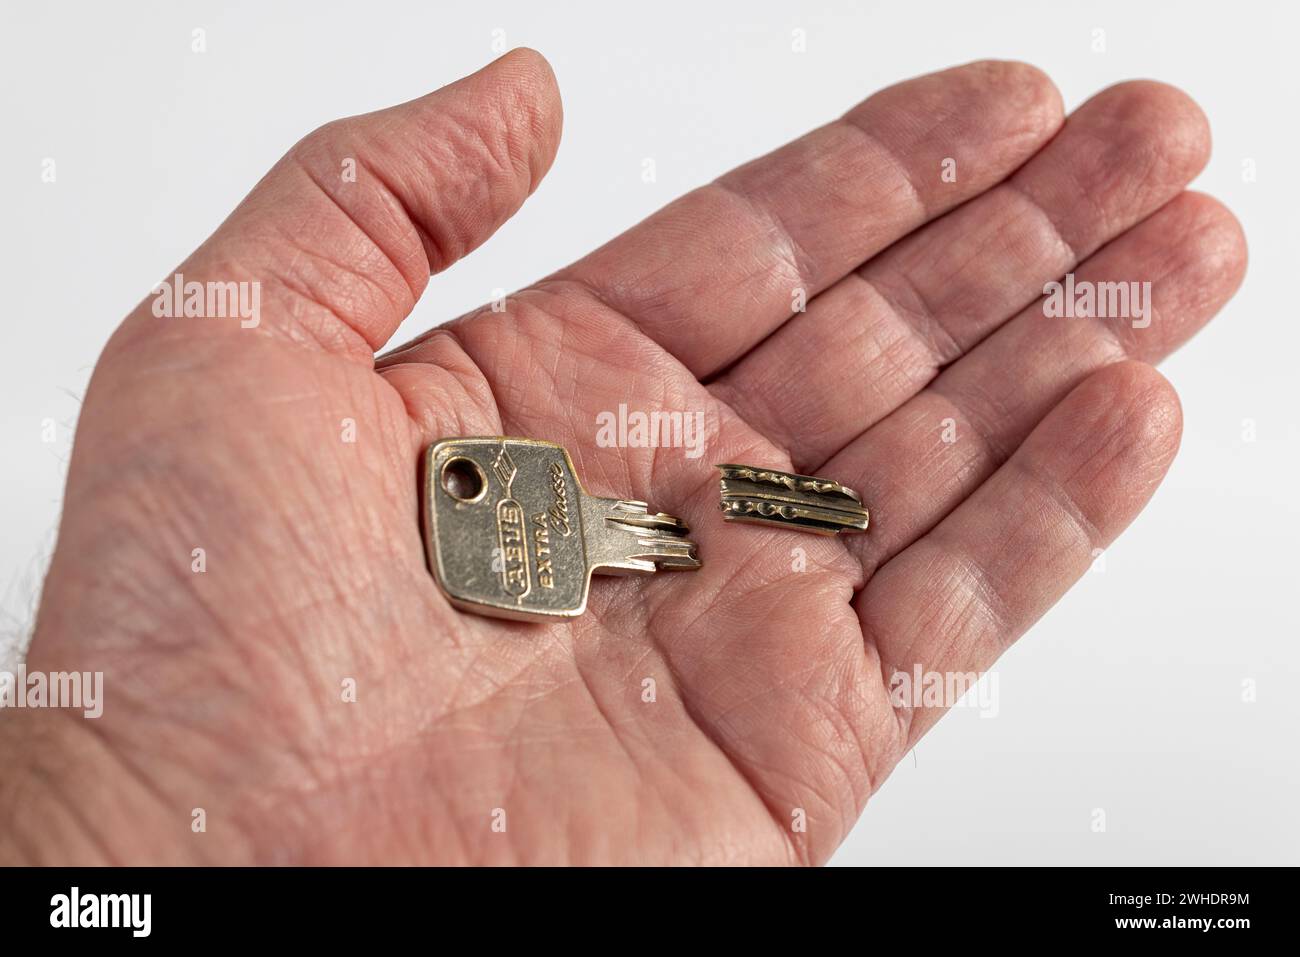 Broken apartment key on man's palm, dimple key, cylinder key, white background, Stock Photo